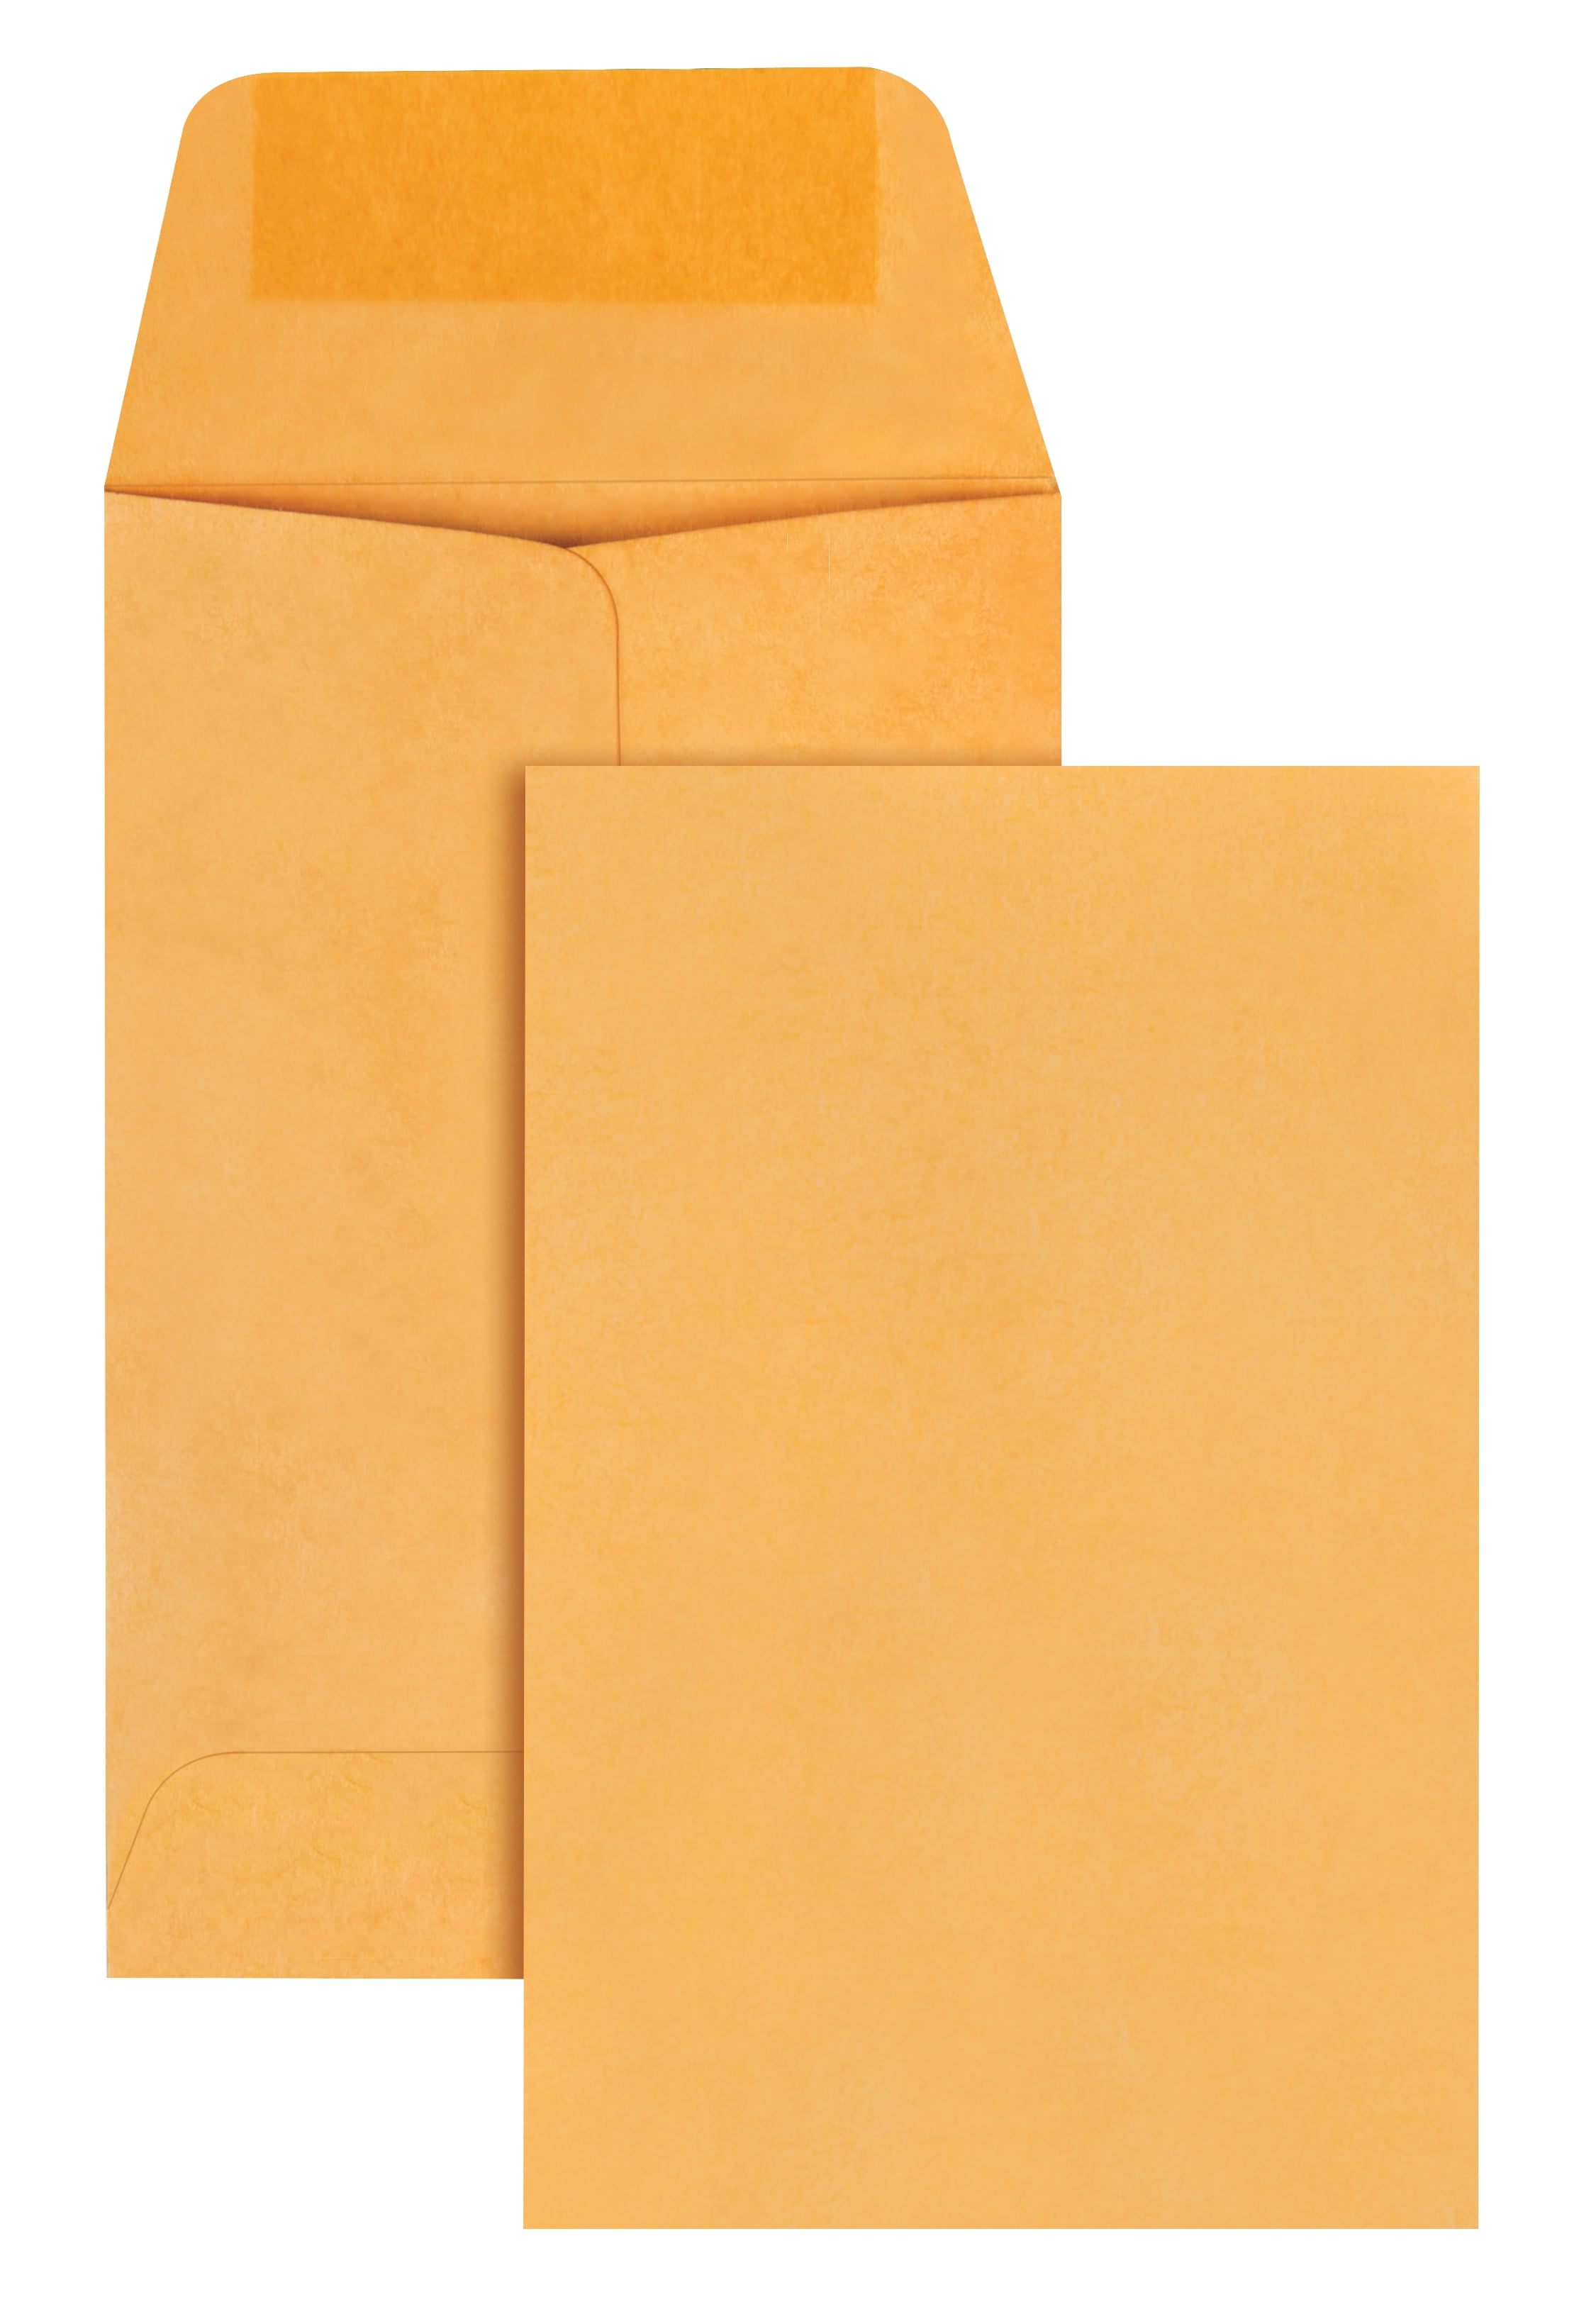 Dab-N-Seal Envelope Moistener with Adhesive, 50ML Bottle, 3 Pack 46071  (B26)